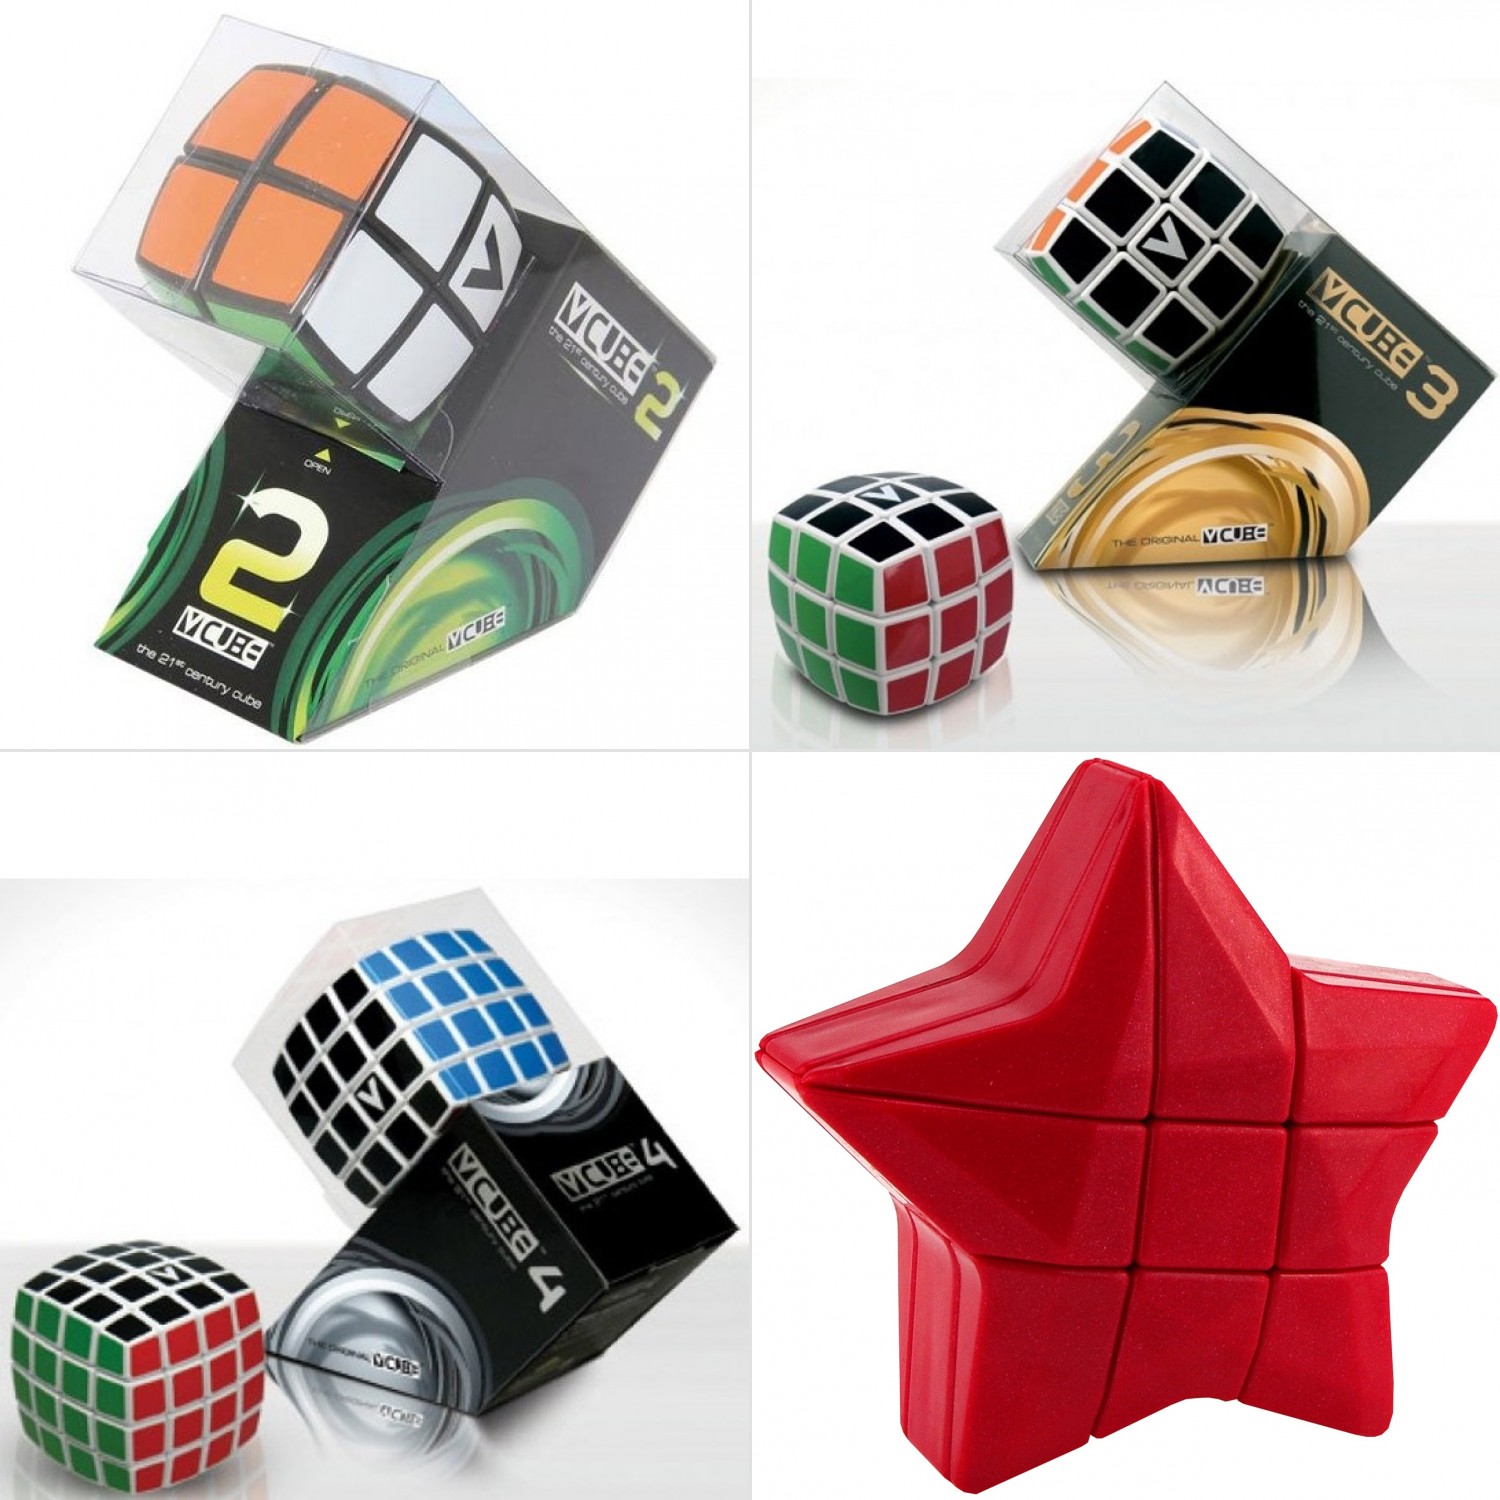 V-cube 2 + v-cube 3 + v-cube-4 + rubiks